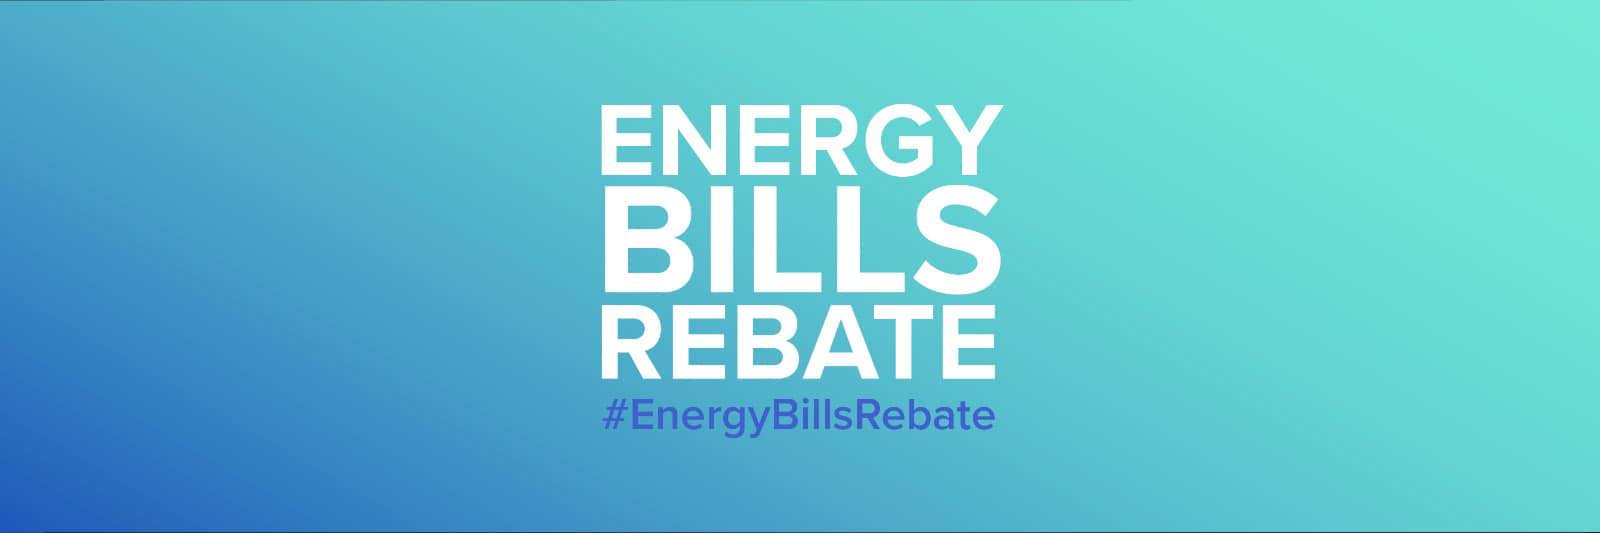 Energy bill rebate